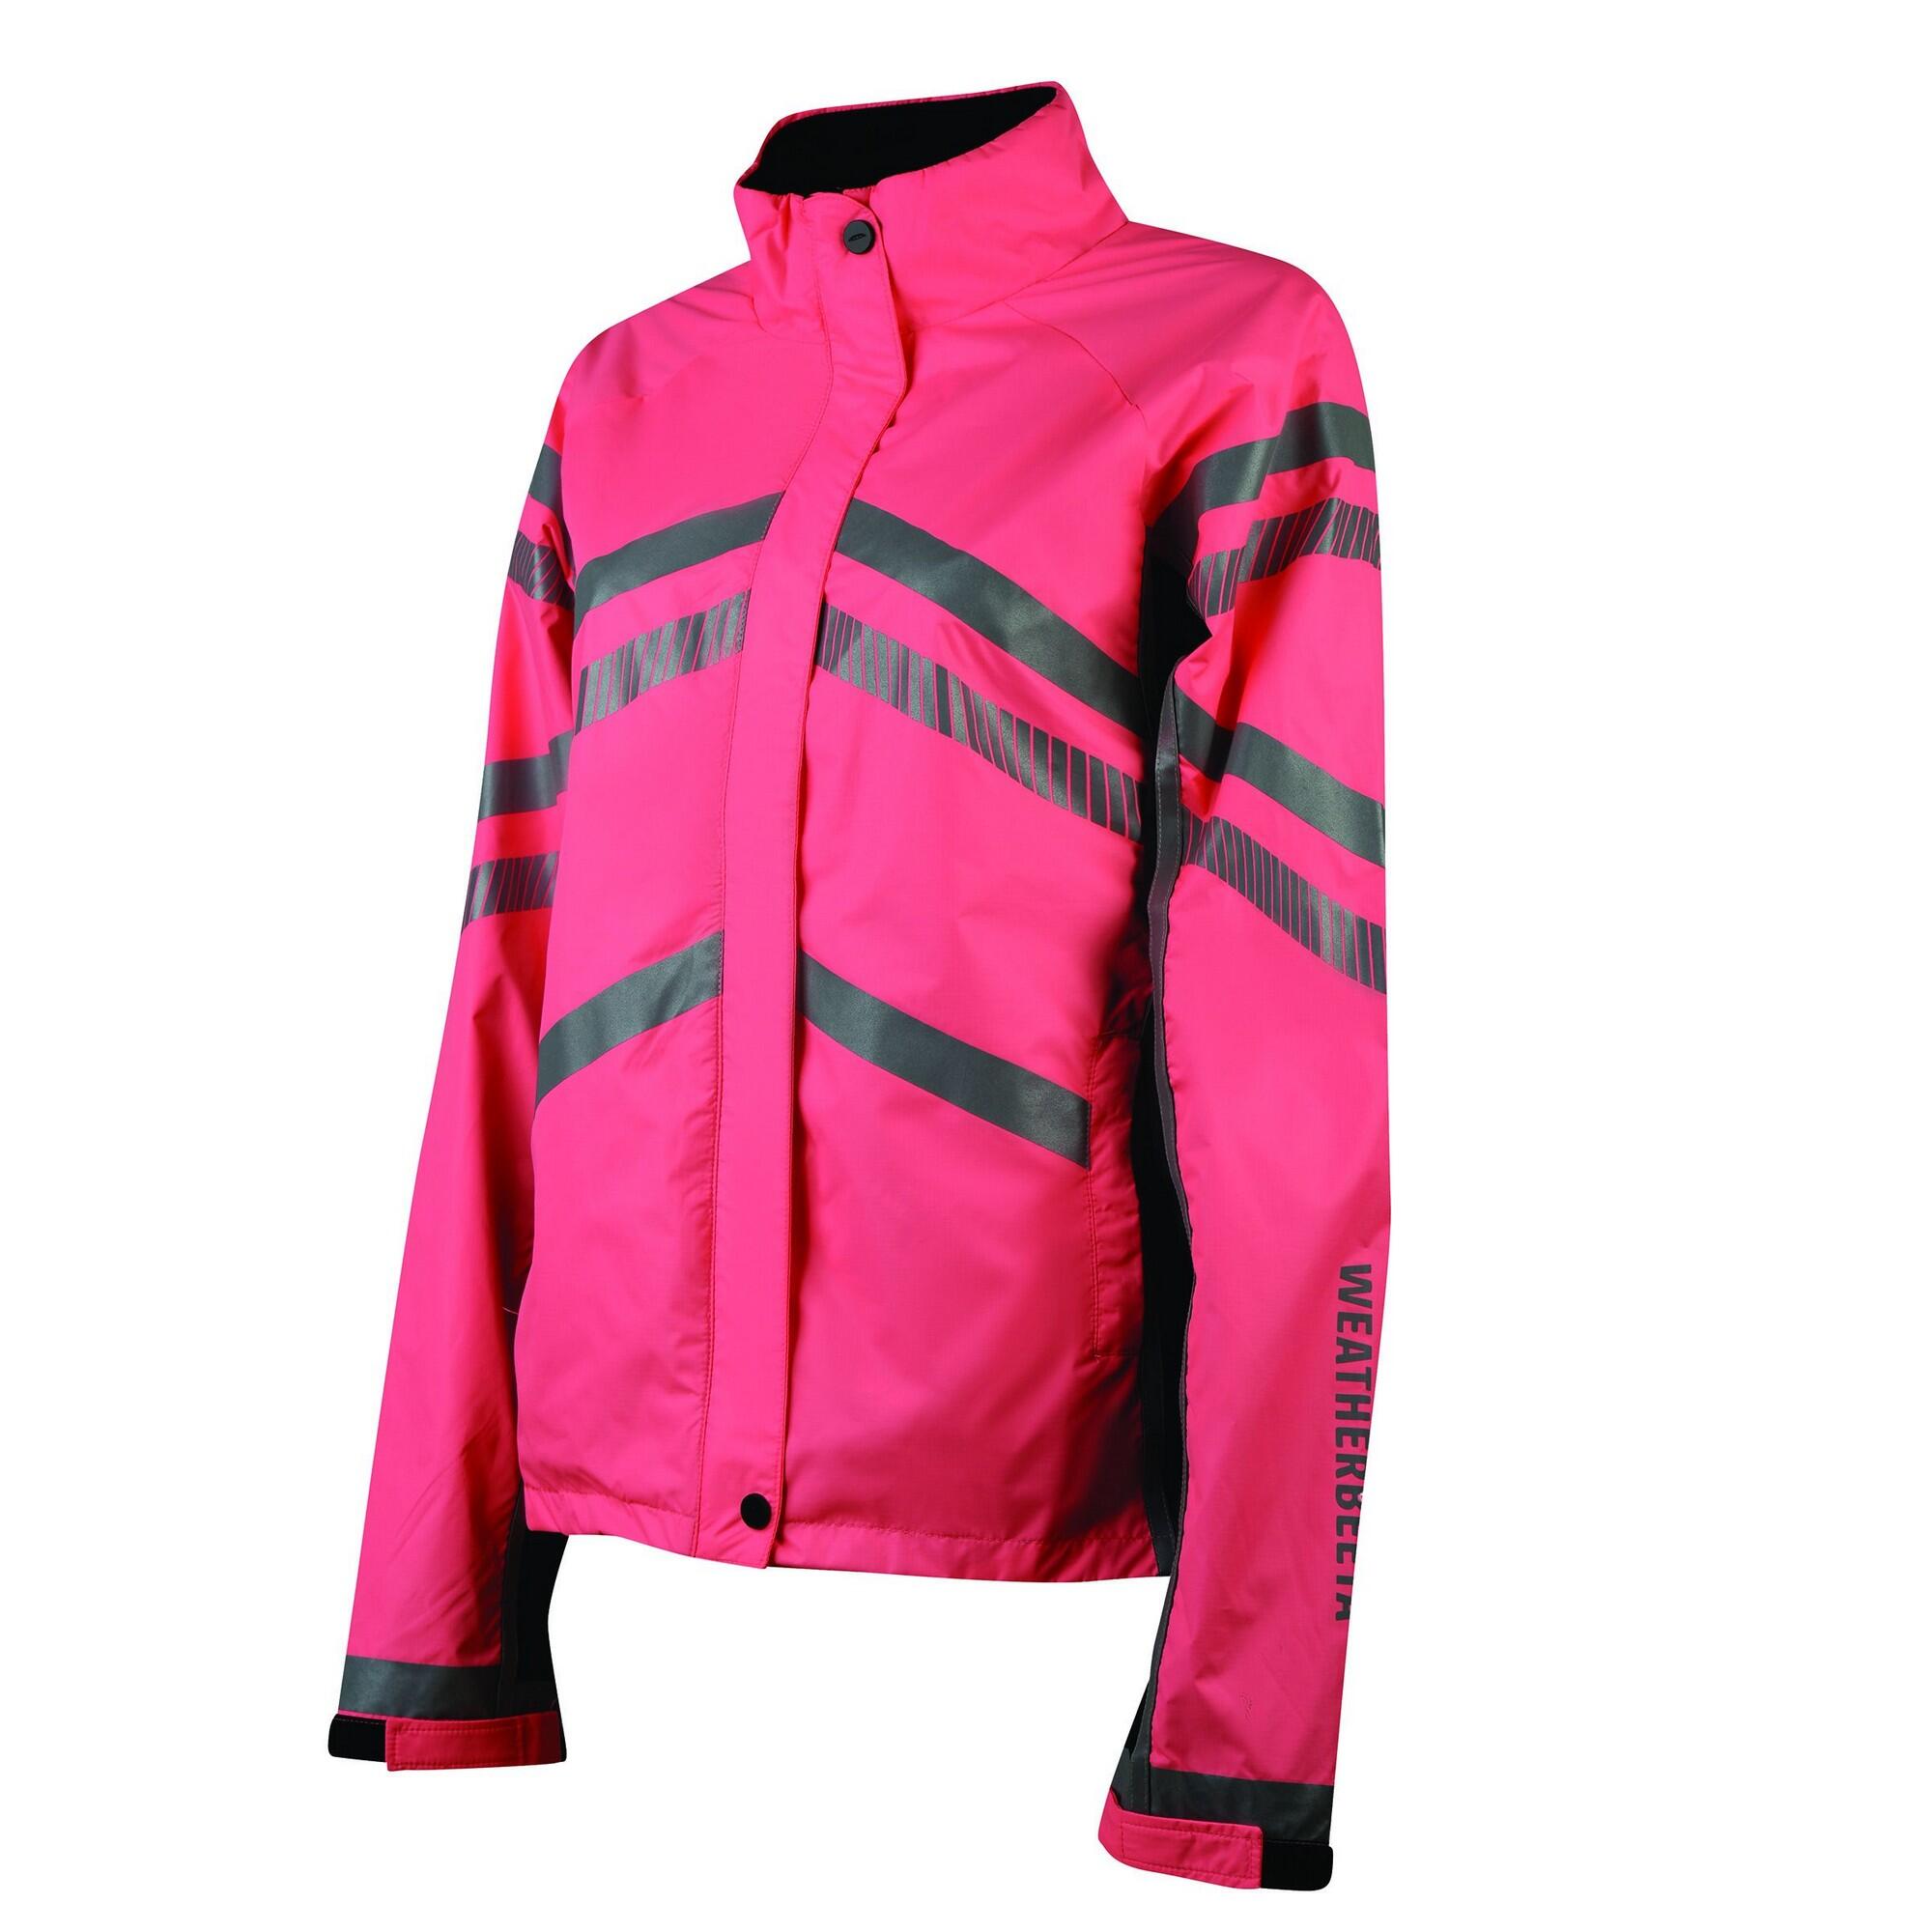 WEATHERBEETA Unisex Adult Reflective Lightweight Waterproof Jacket (Hi Vis Pink)